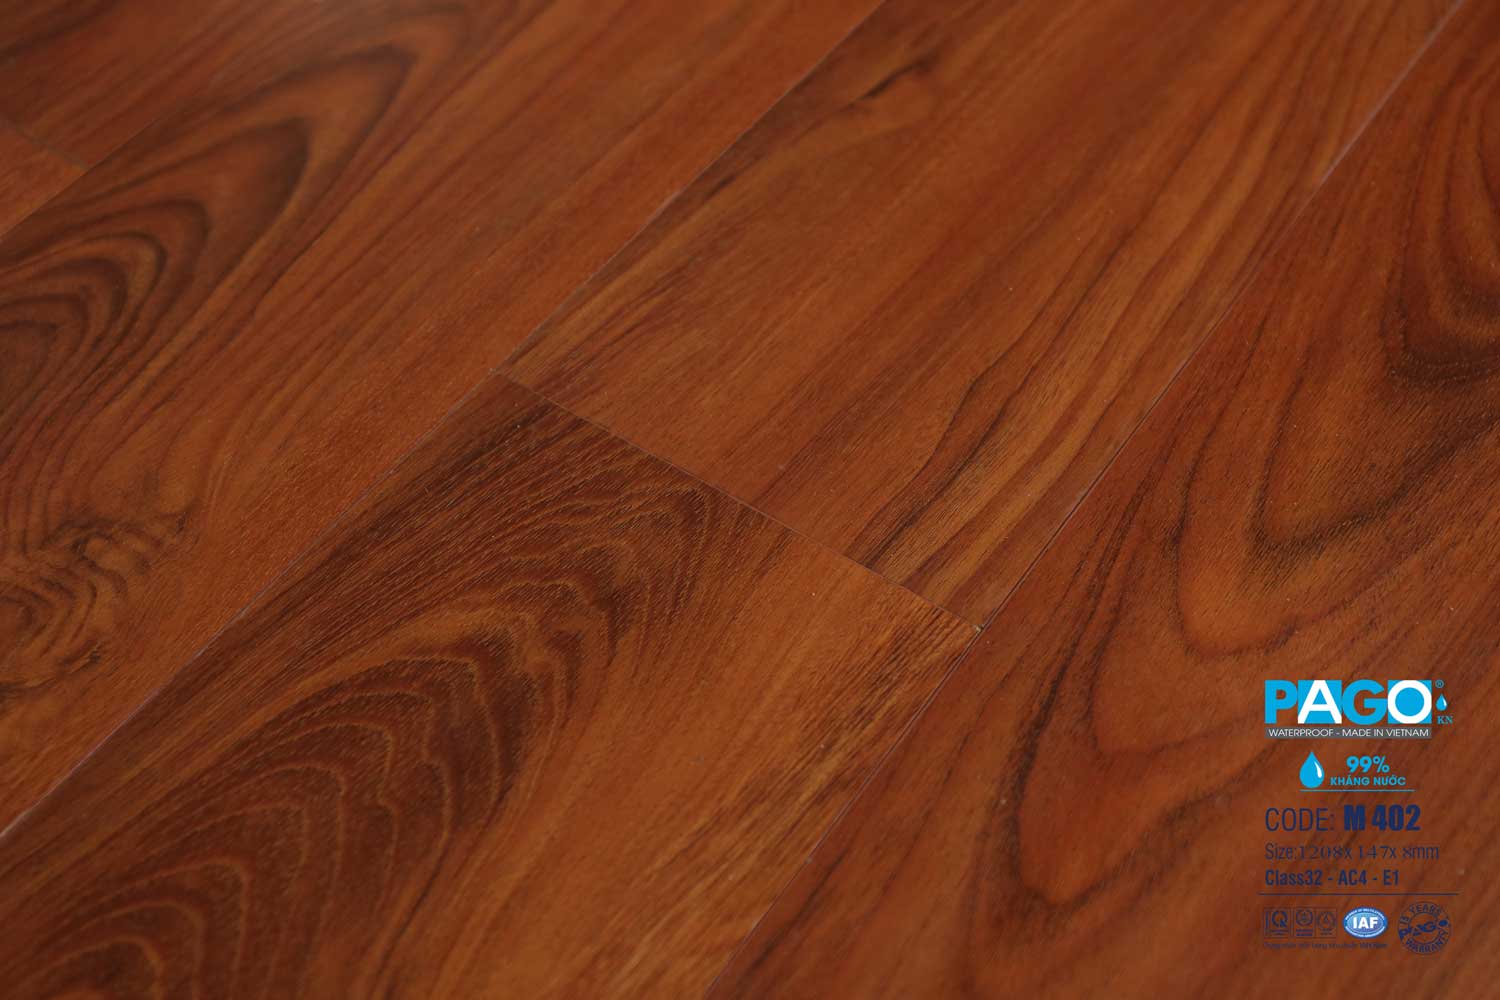 Sàn gỗ Pago - M402